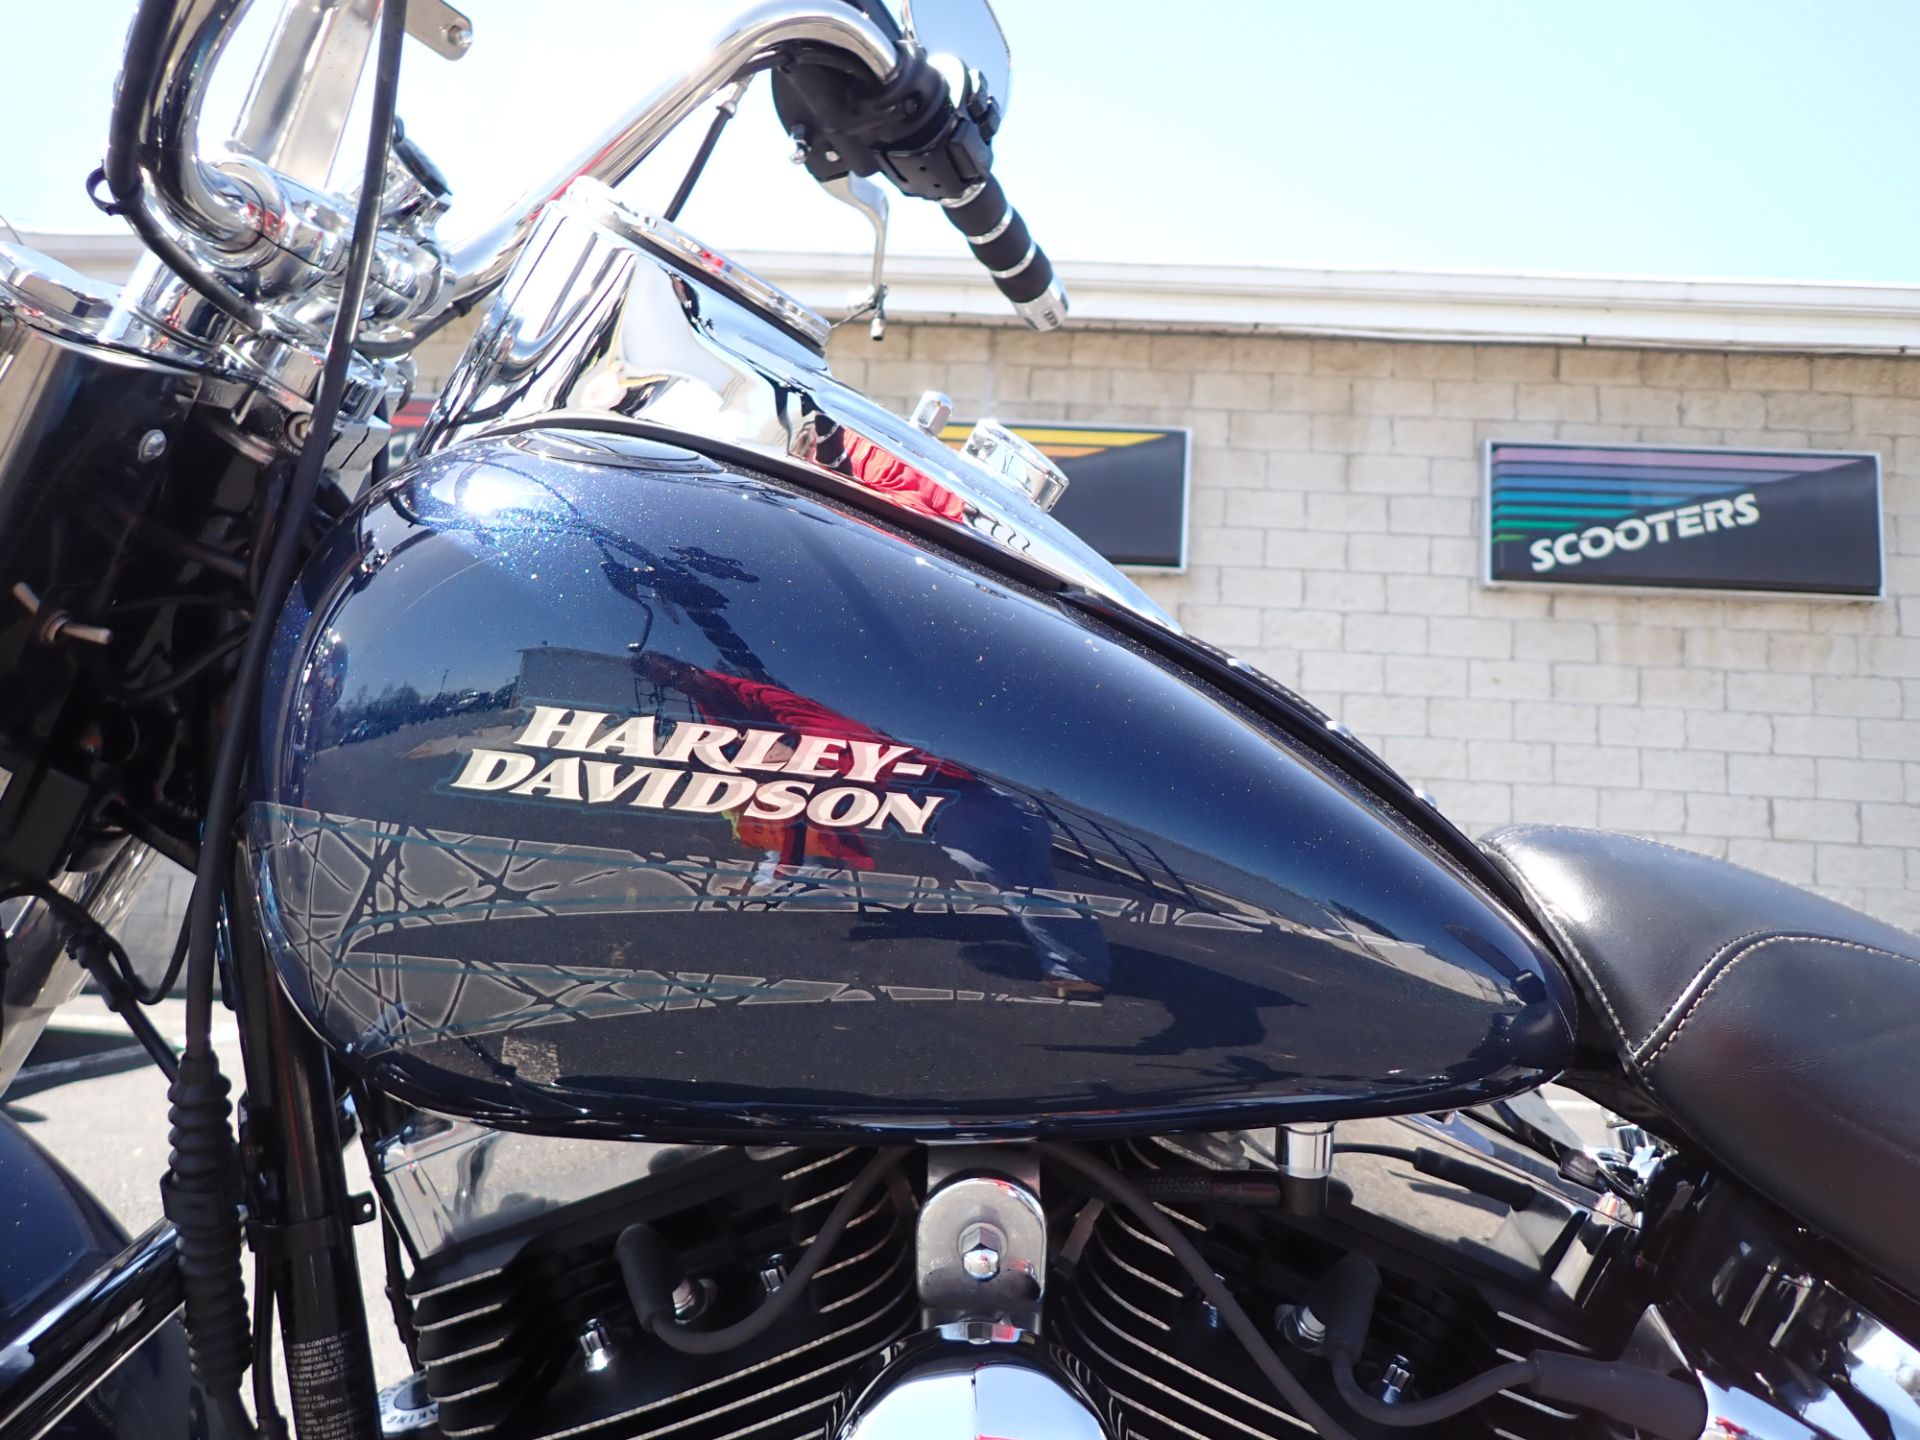 2016 Harley-Davidson Heritage Softail® Classic in Massillon, Ohio - Photo 9